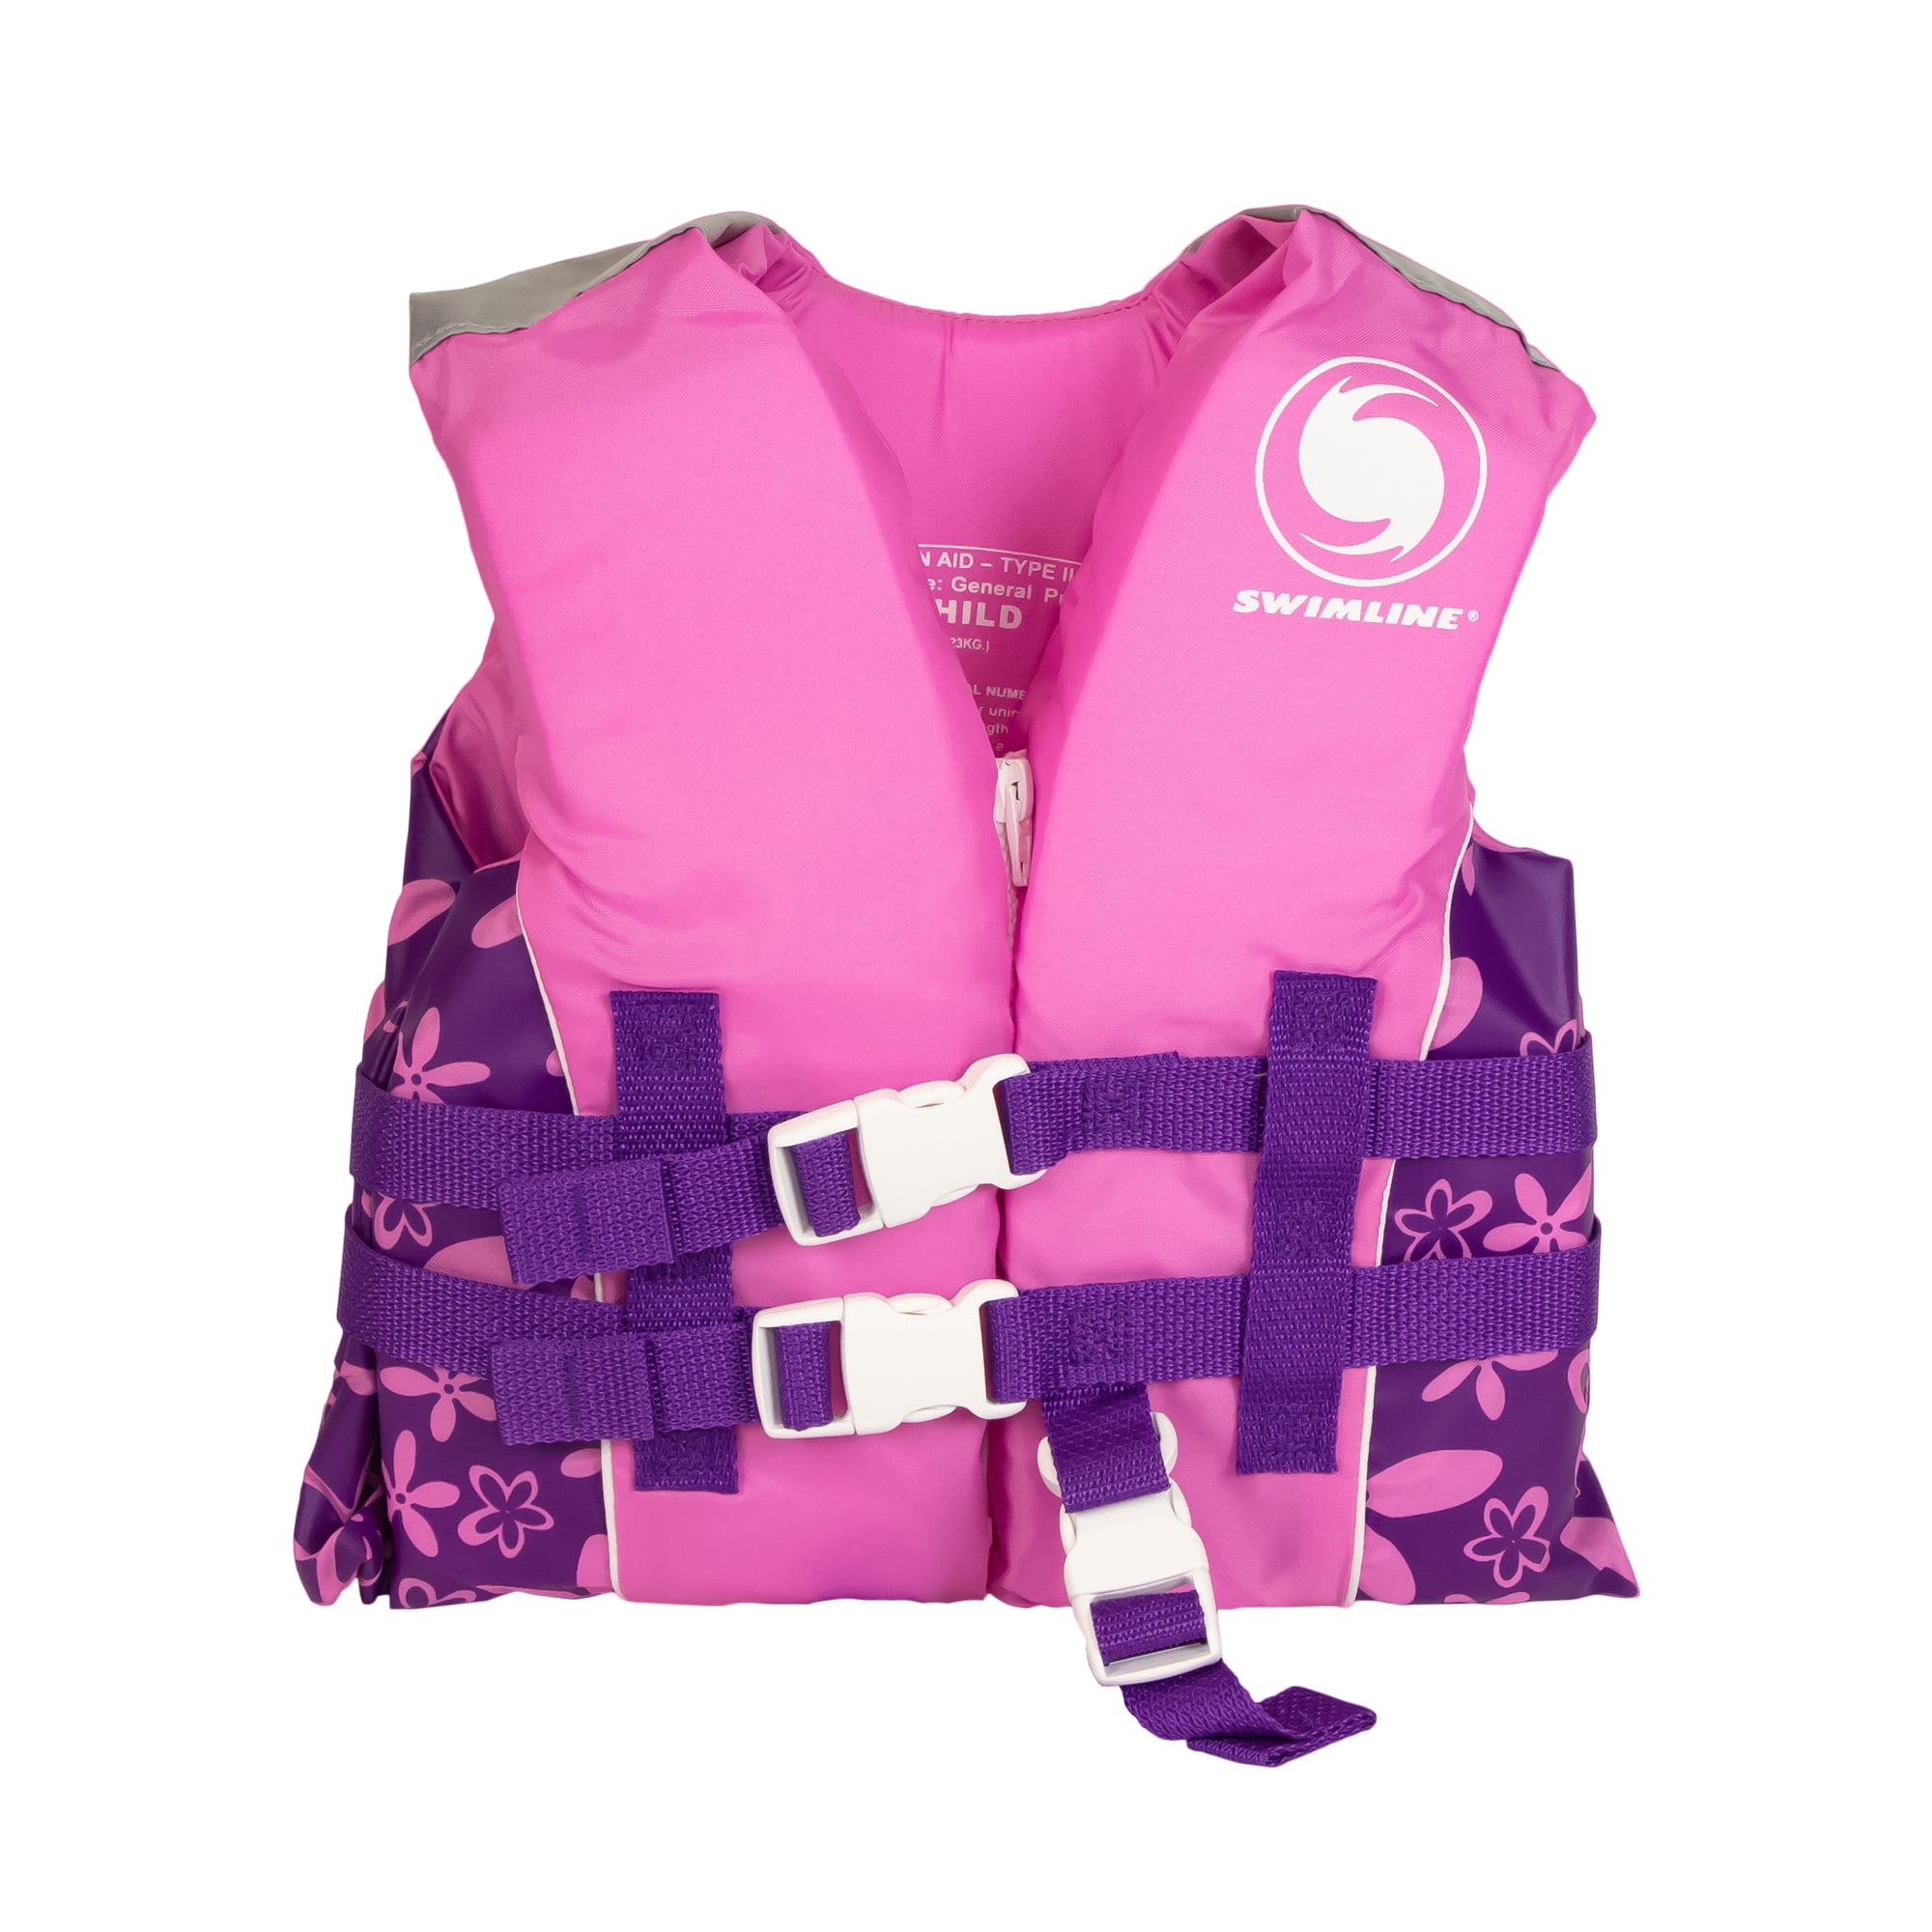 Pish de natation rose et violet Girls de sauvetage floral Gilet - jusqu'Ã  50 lbs | Walmart Canada